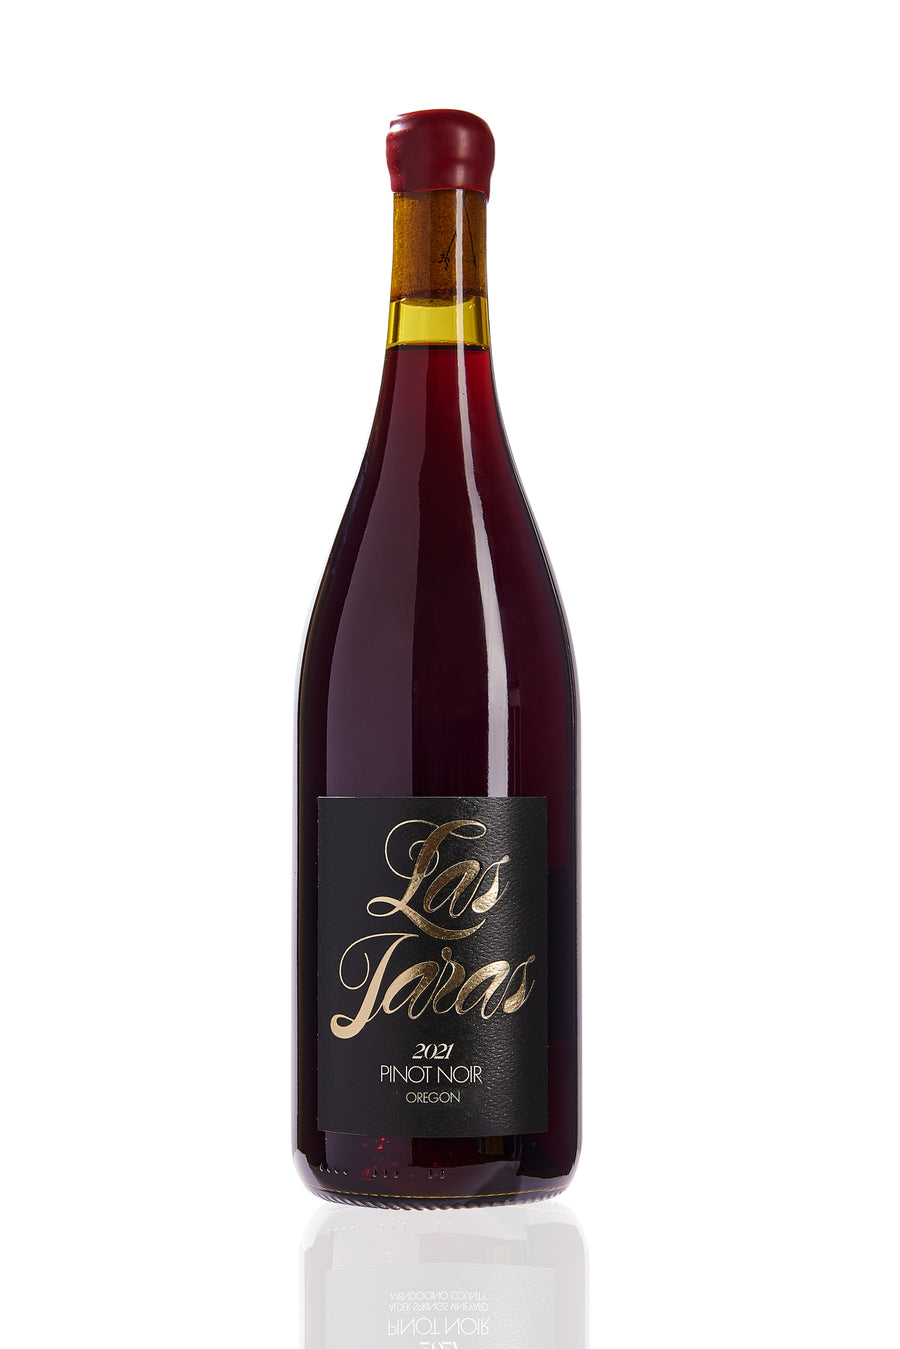 2021 Oregon Pinot Noir